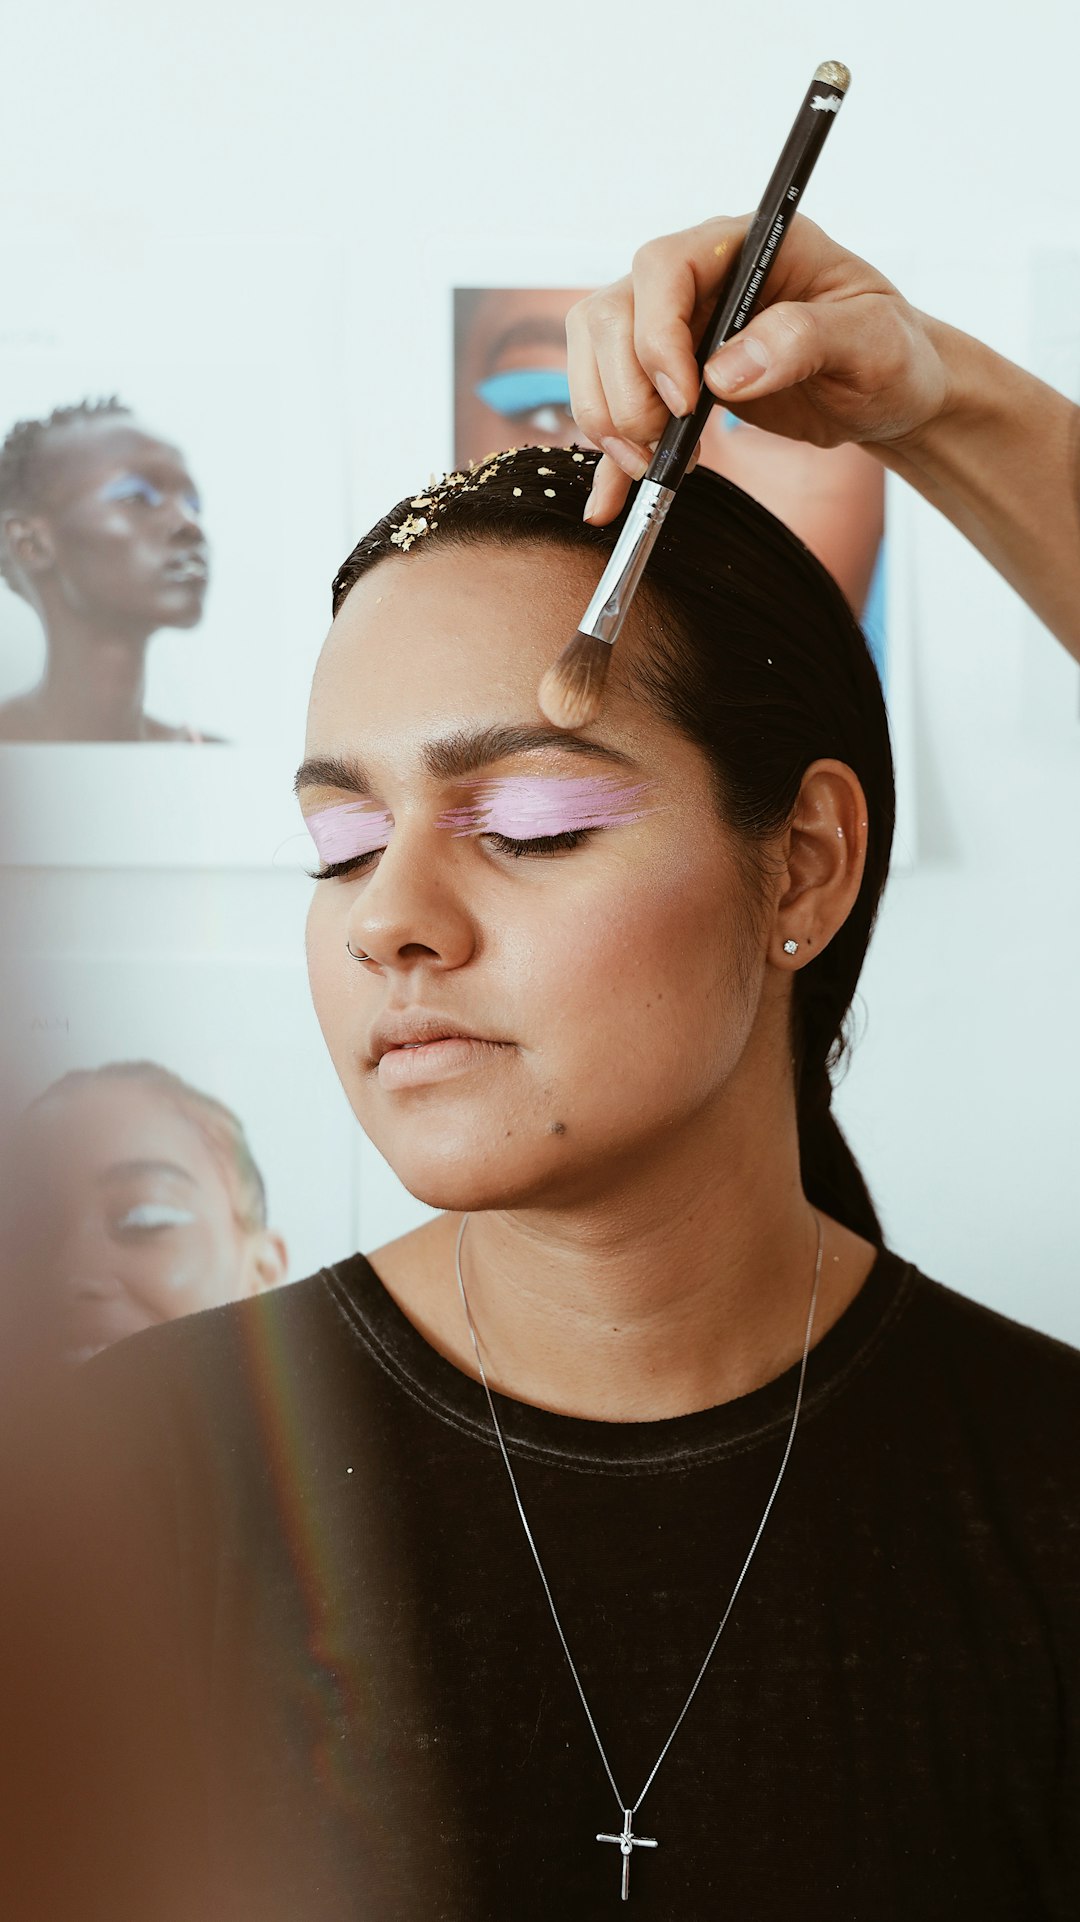 makeup artist applying makeup using brush on woman